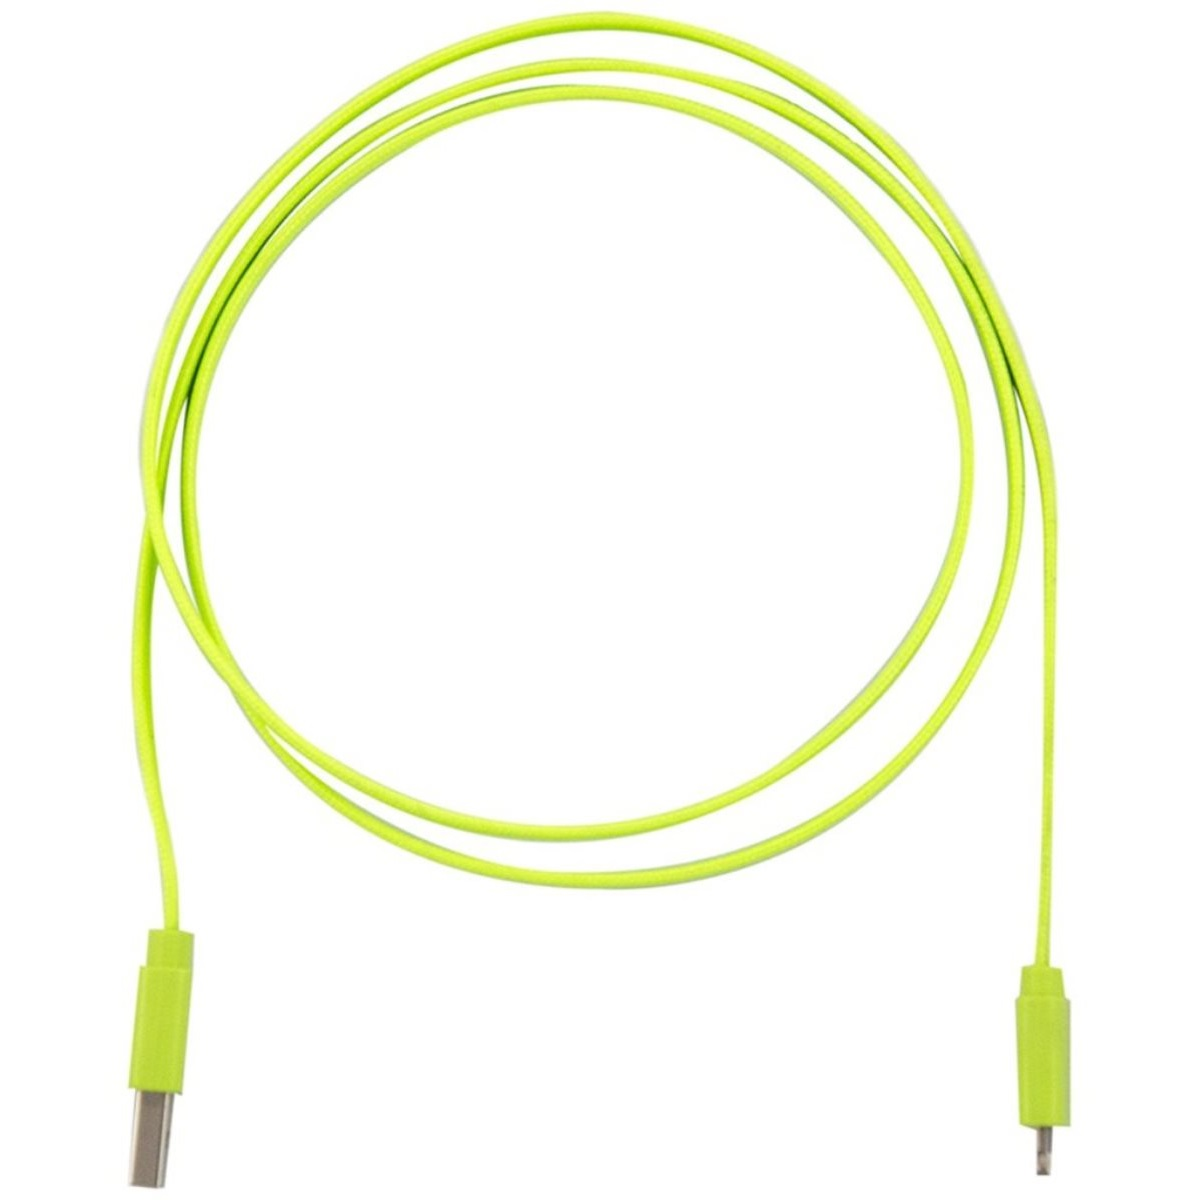 XTREME MAC Cable Kabel, Lightning Lightning 1m Green Grün Flat